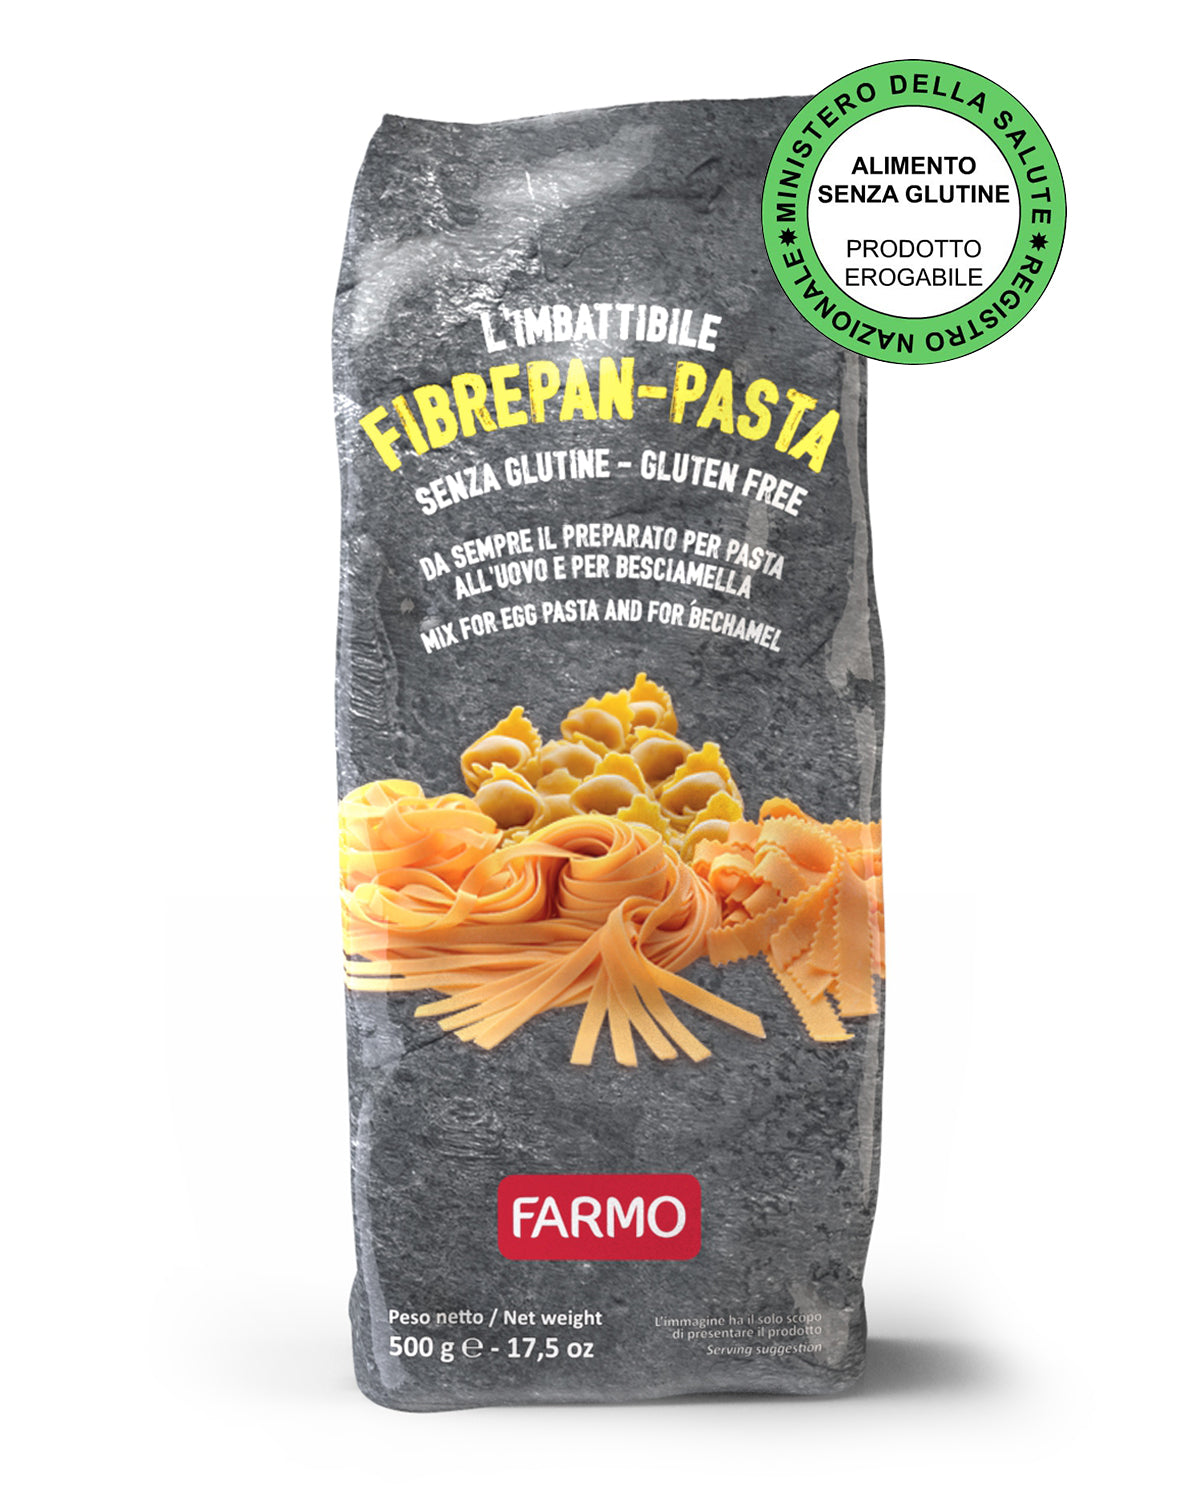 Fibrepan Pasta - Farmo - Eat a better life